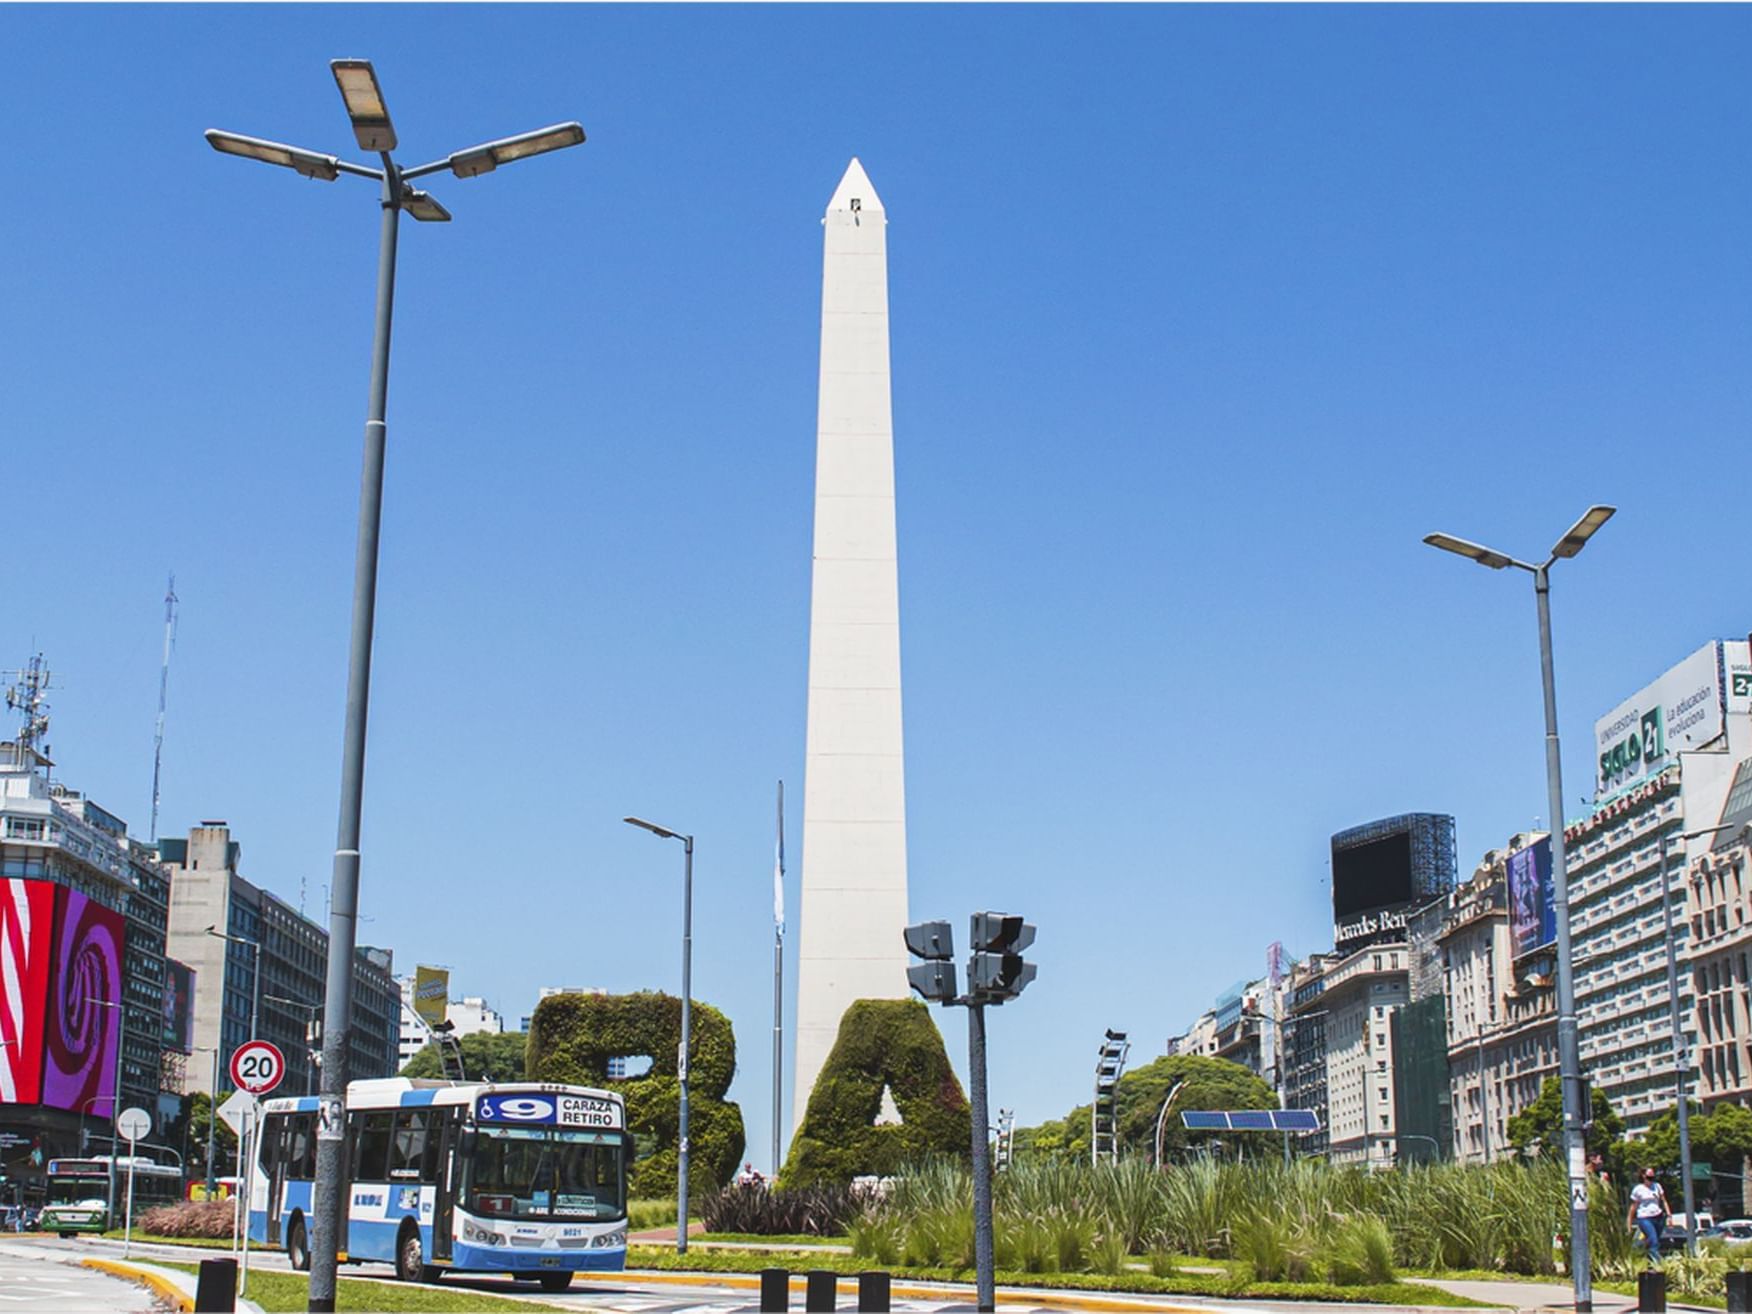 Buenos Aires Obelisk & city view near Recoleta Grand Hotel